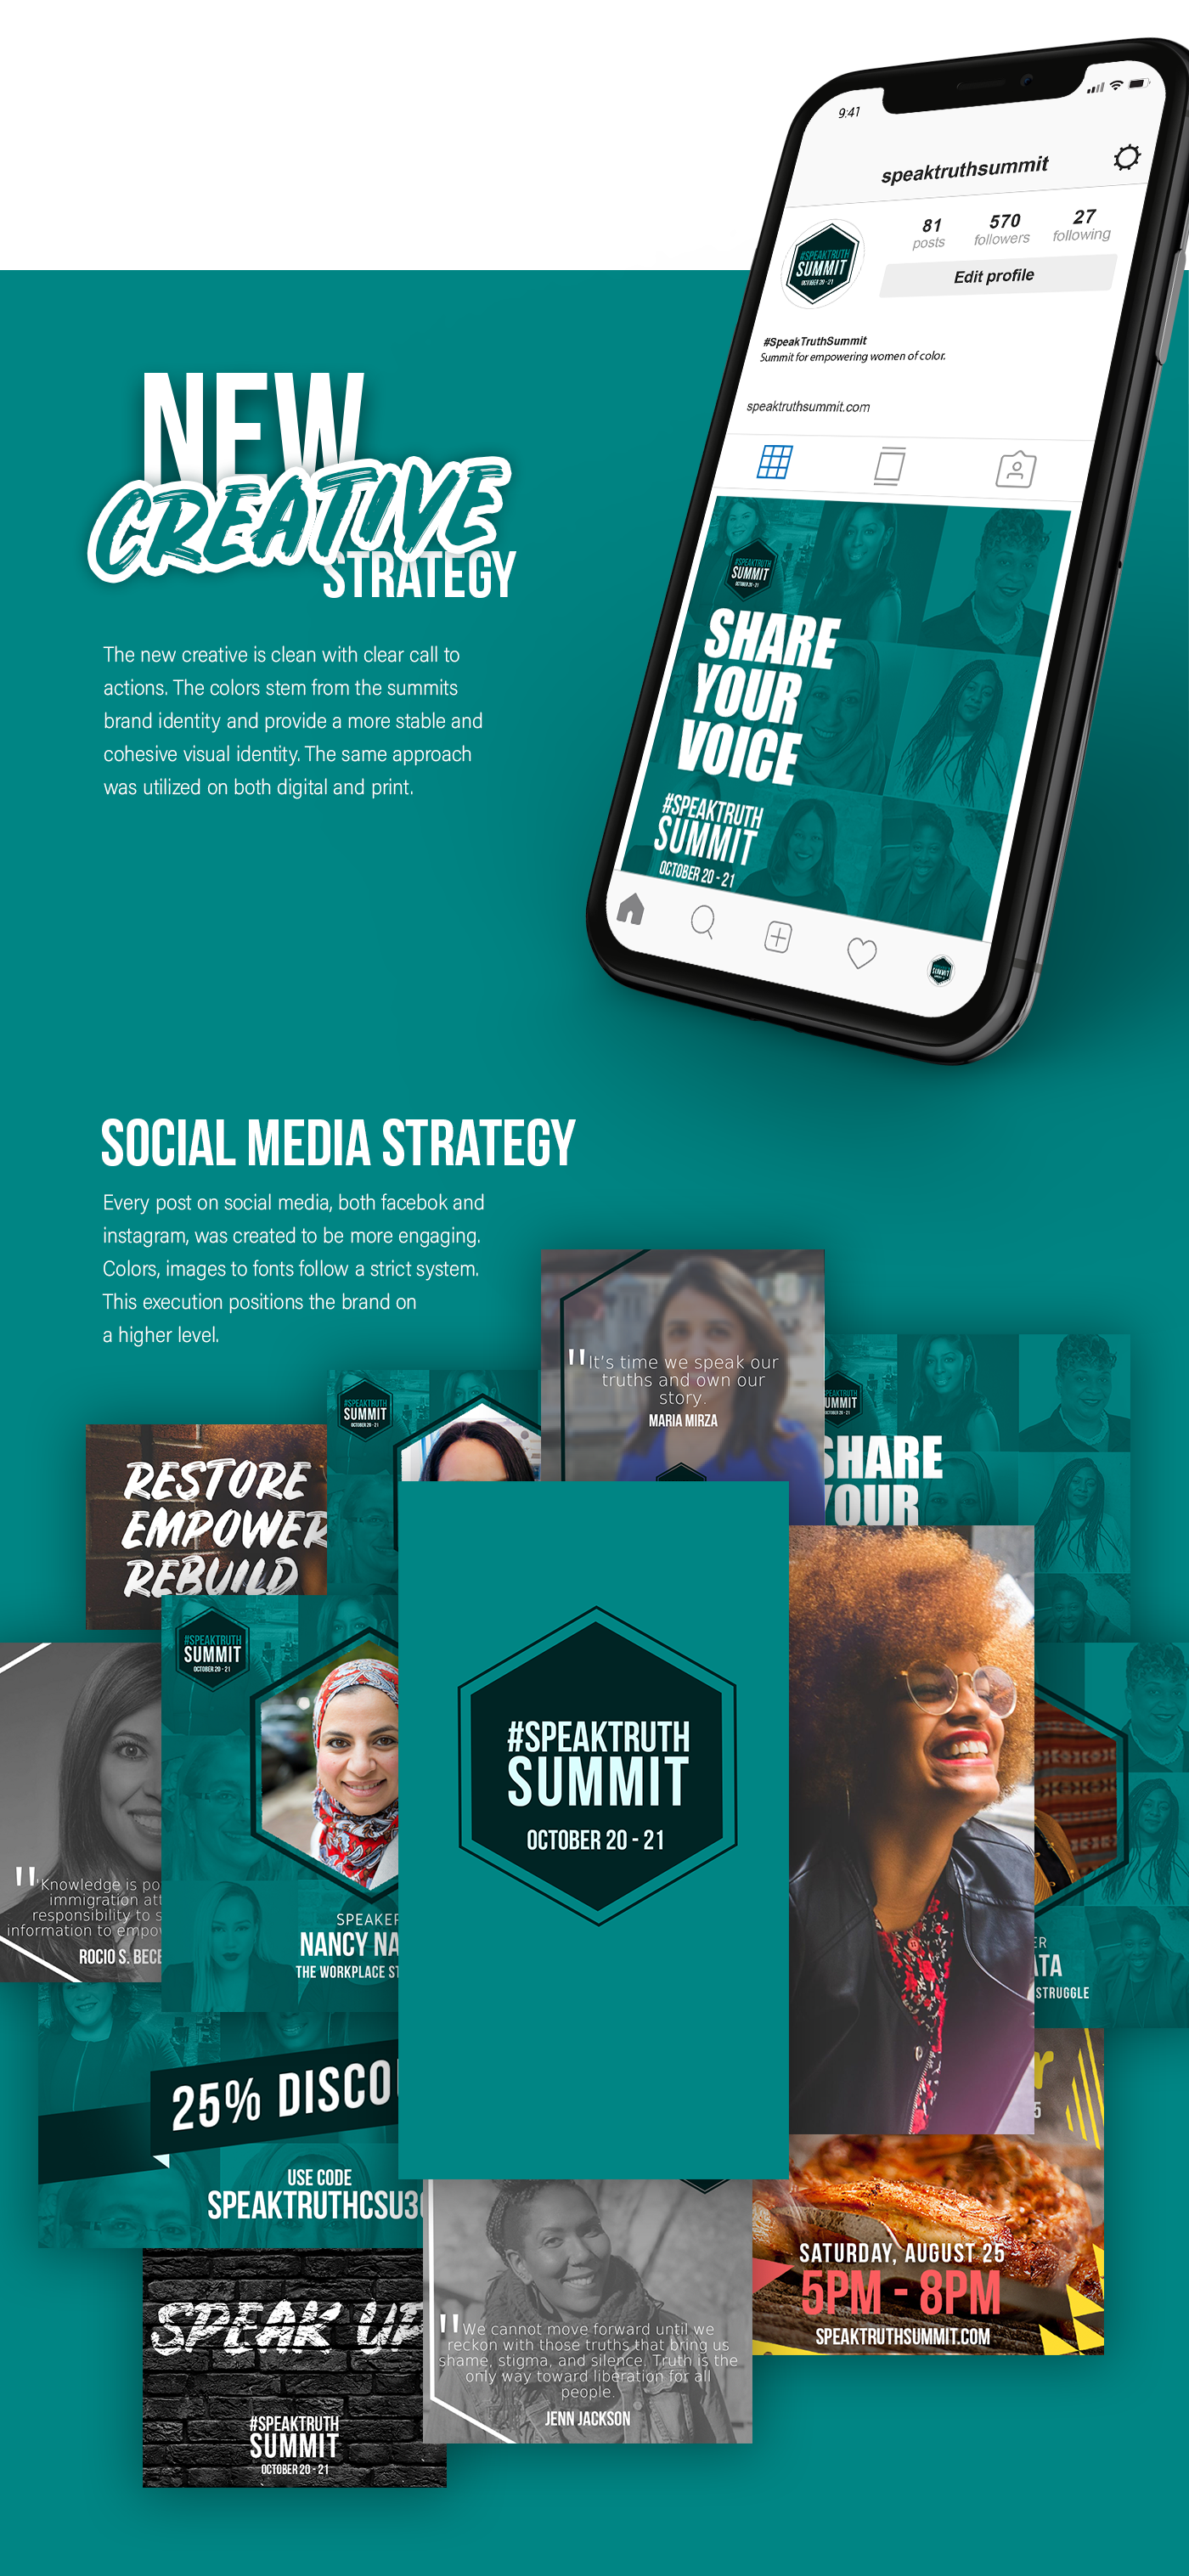 summit Seapking speakers women women of color social media social Social Strategy Social Media Strategy social design